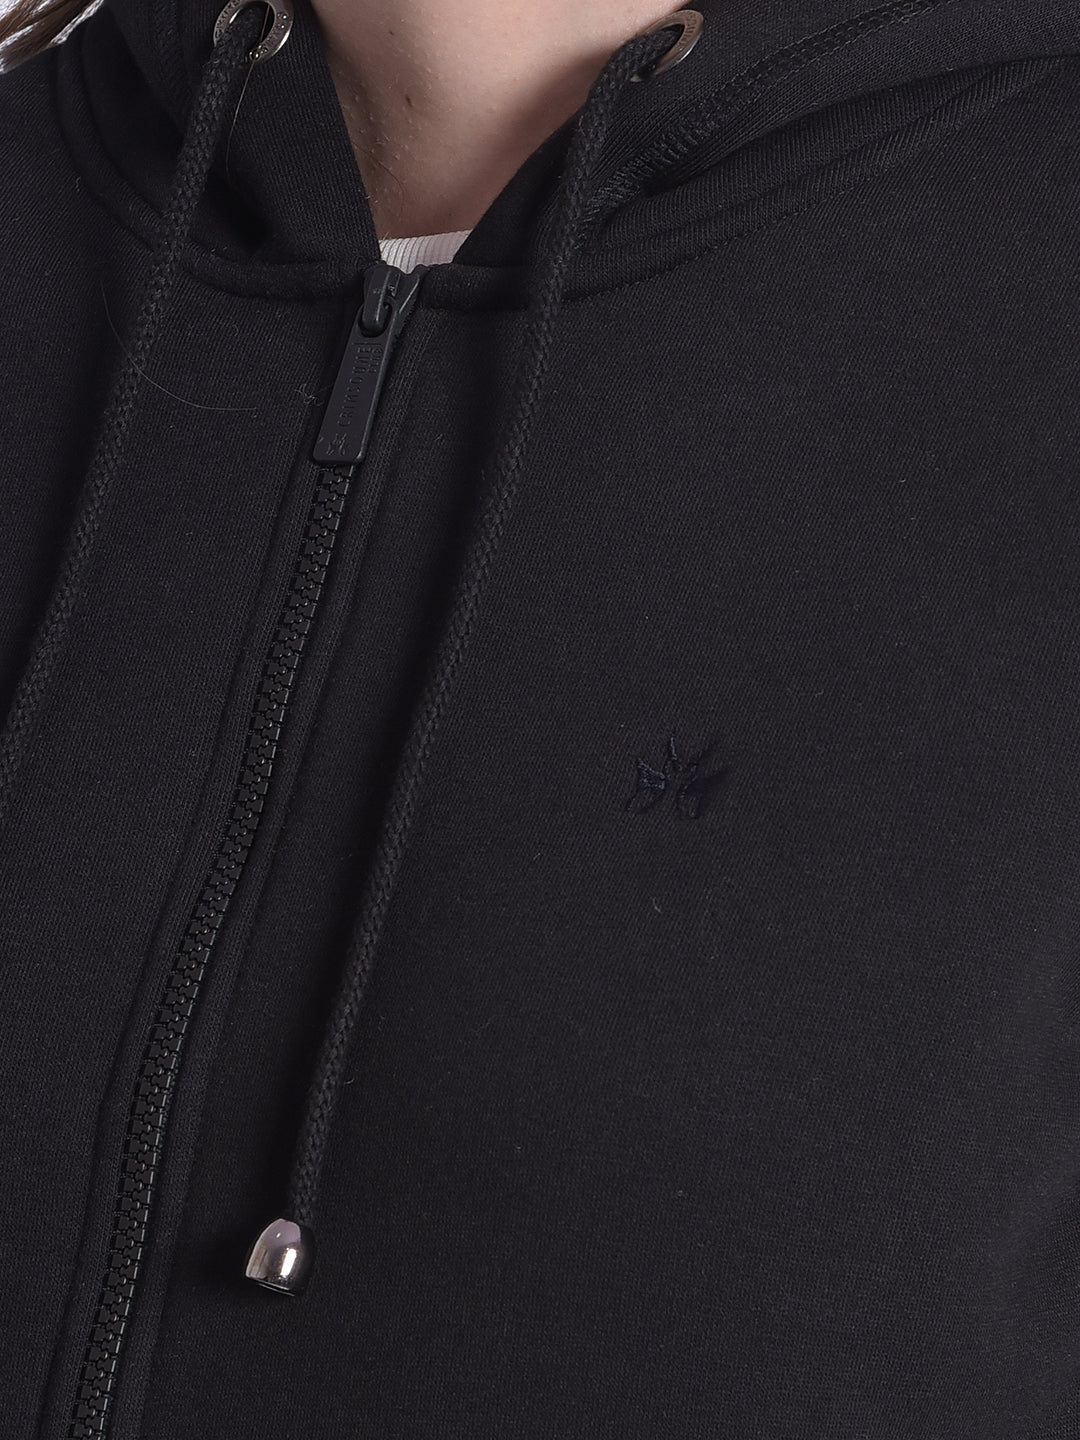 Black Hooded Front-Open Sweatshirt-Women Sweatshirts-Crimsoune Club